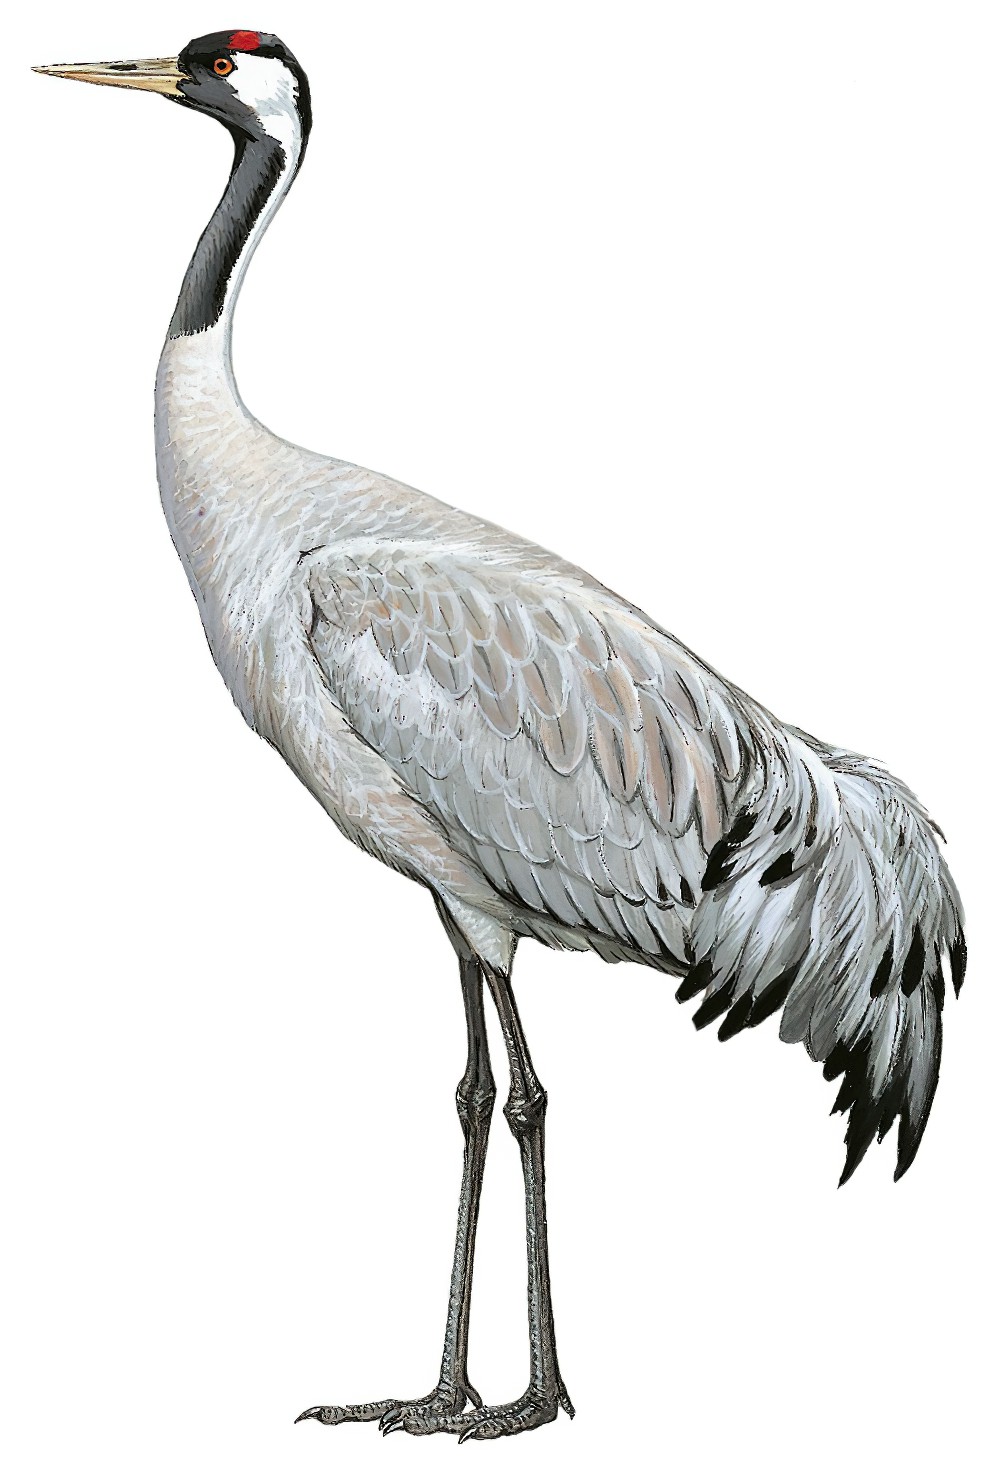 Common Crane / Grus grus